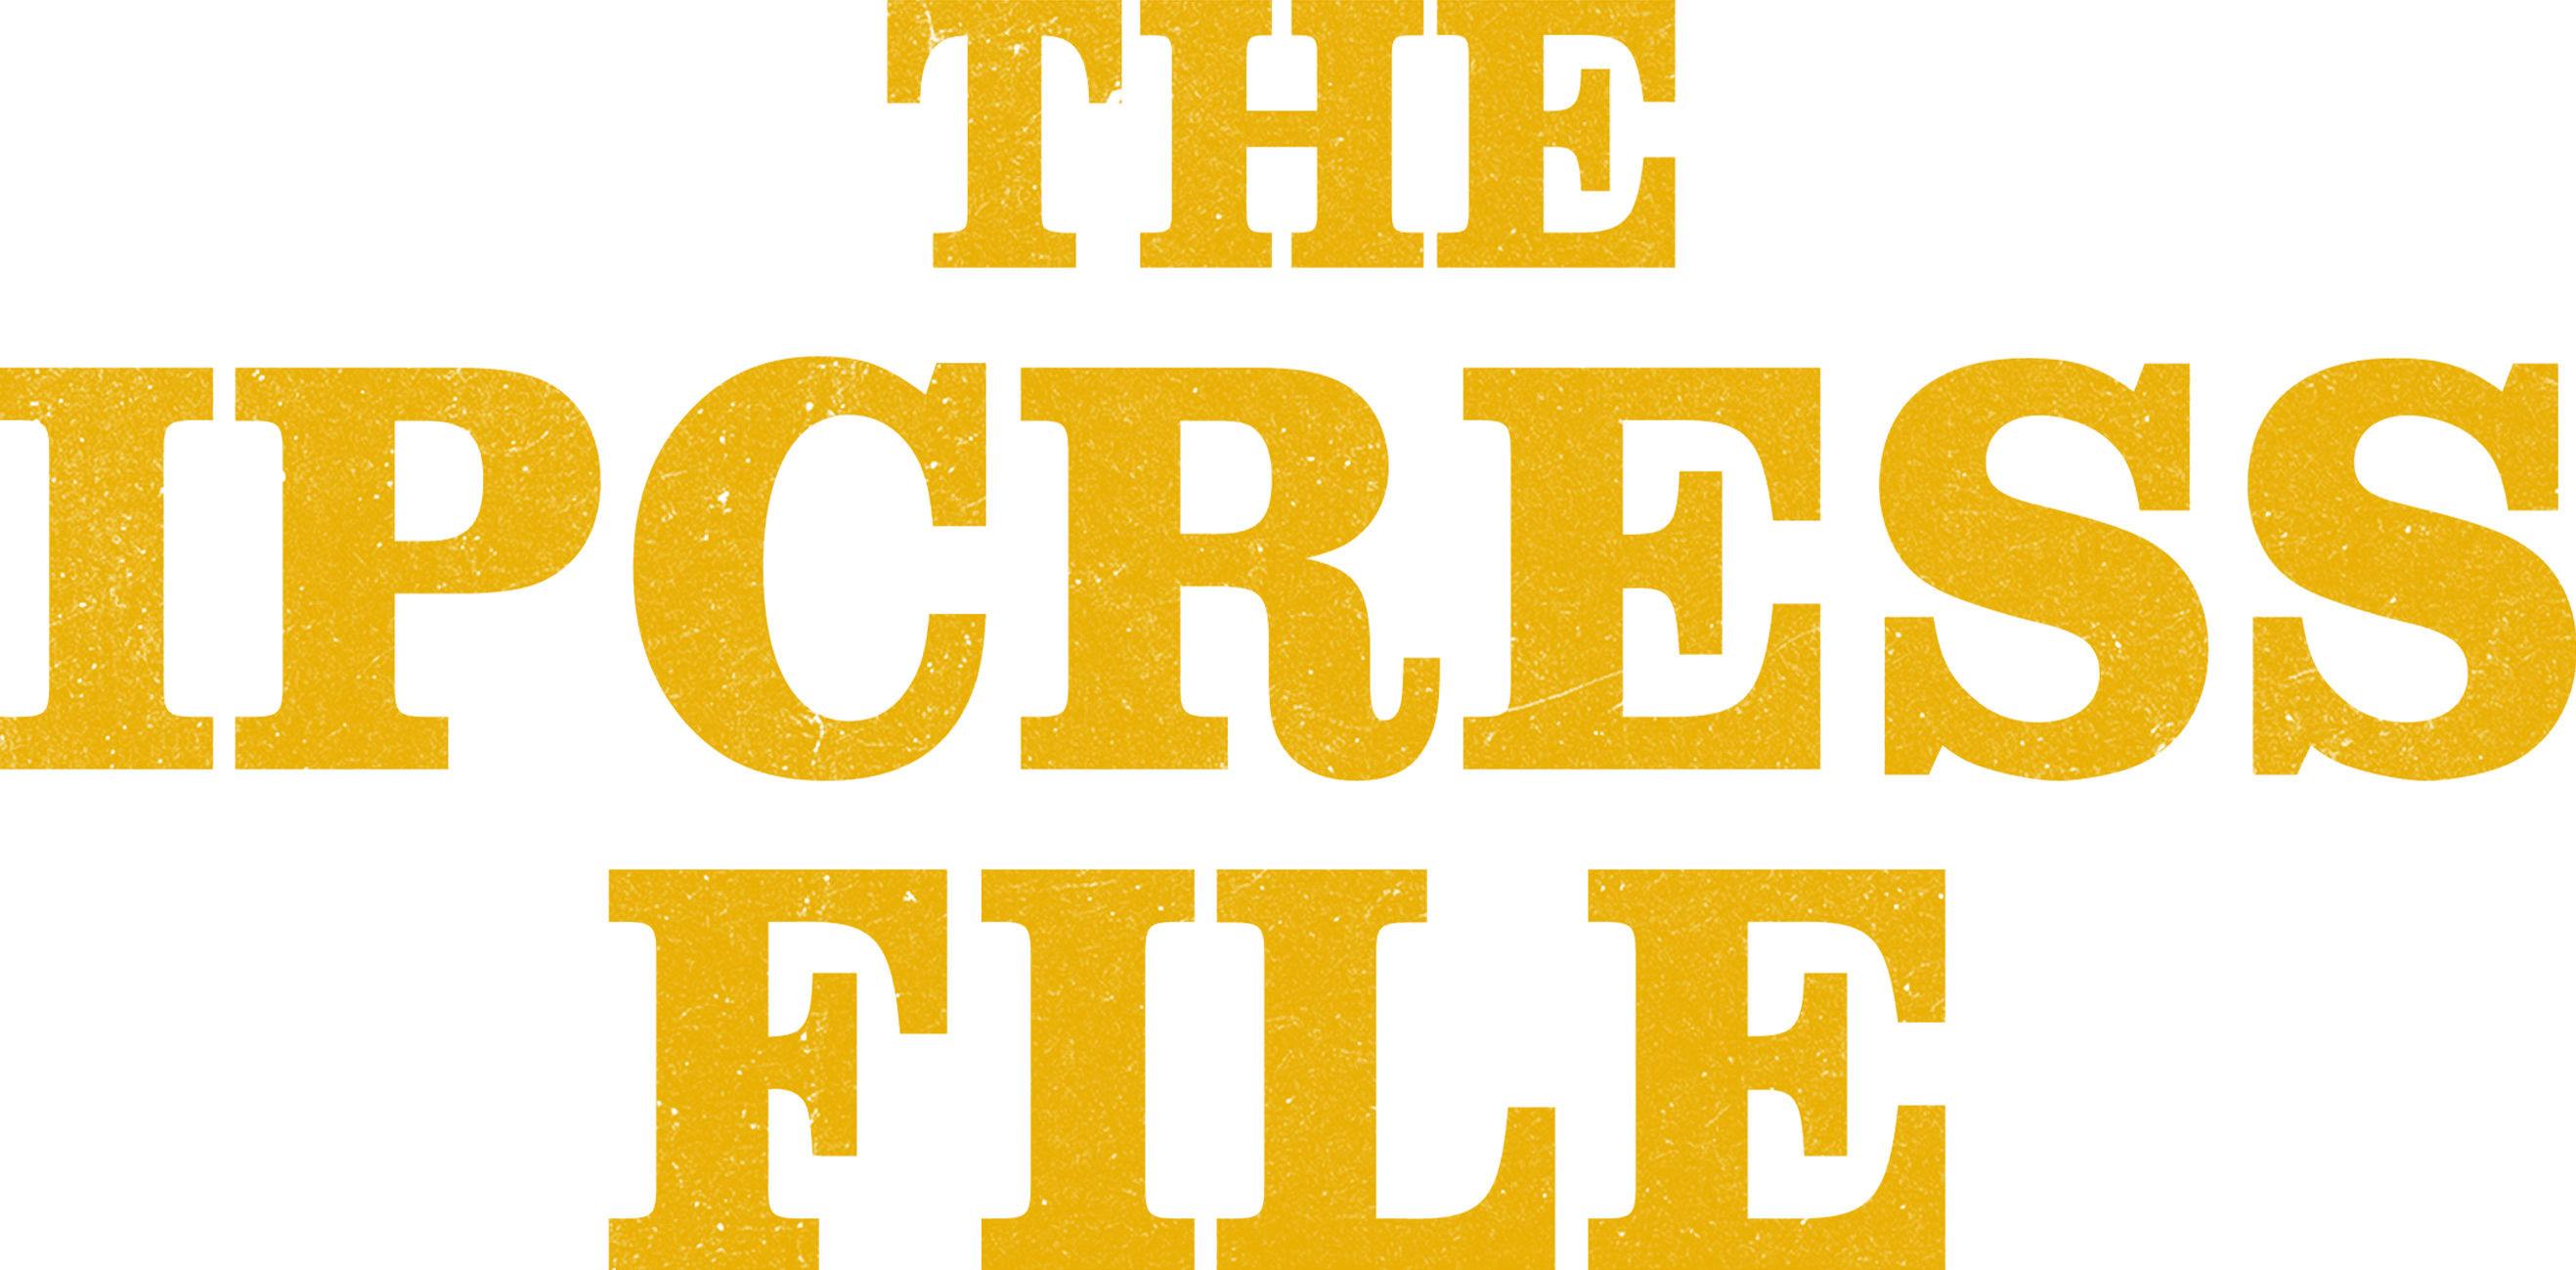 The Ipcress File logo